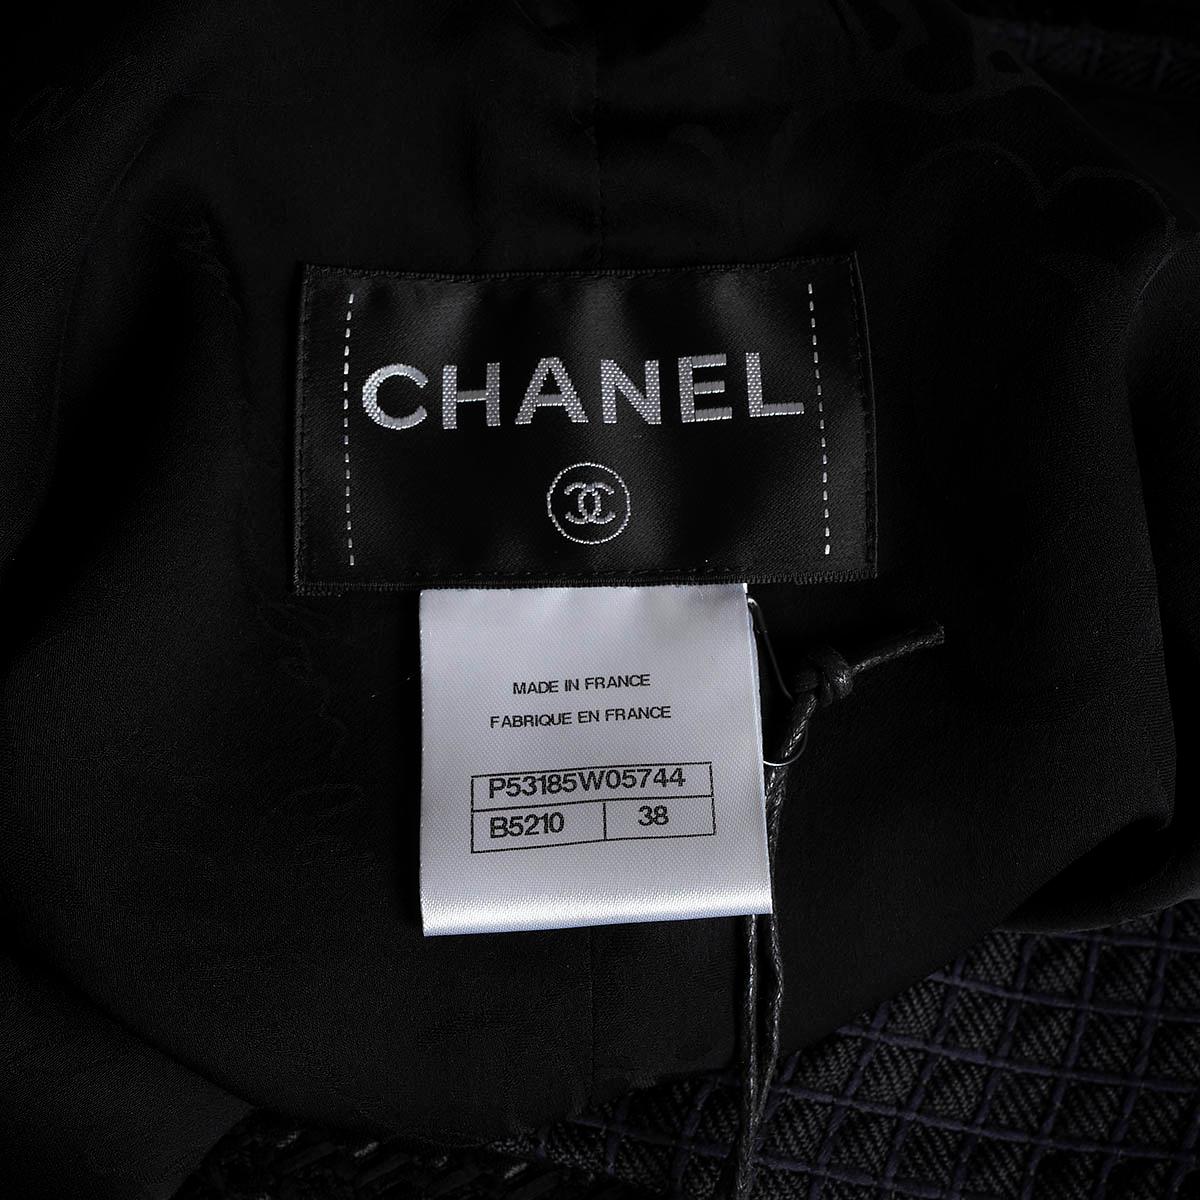 CHANEL black cotton 2016 16C SEOUL DOUBLE BREASTED PANT Suit 38 S 7